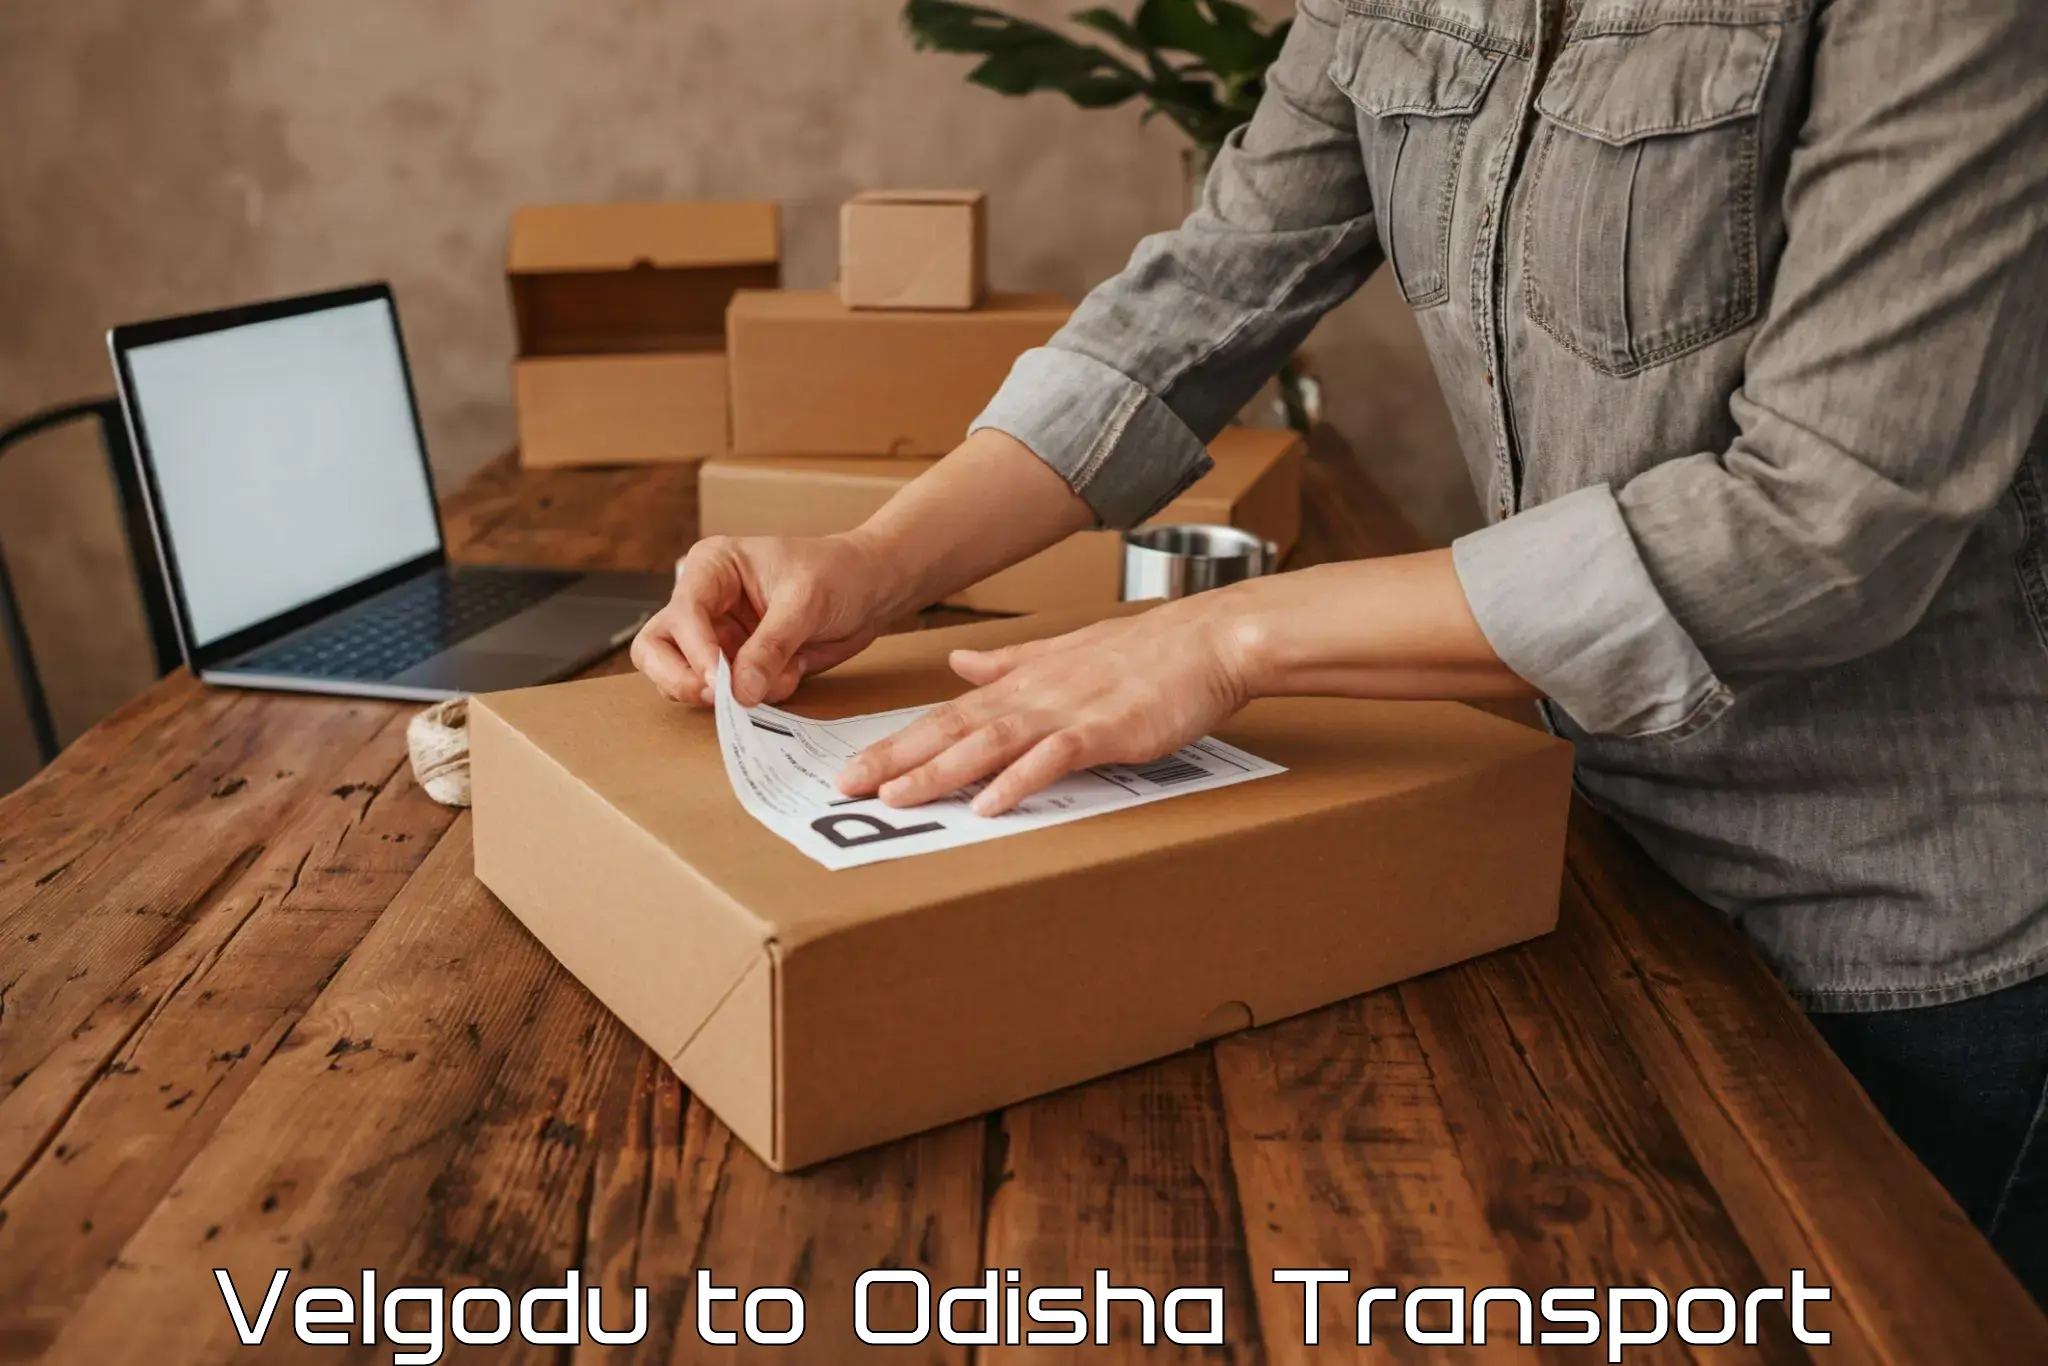 India truck logistics services Velgodu to Odisha